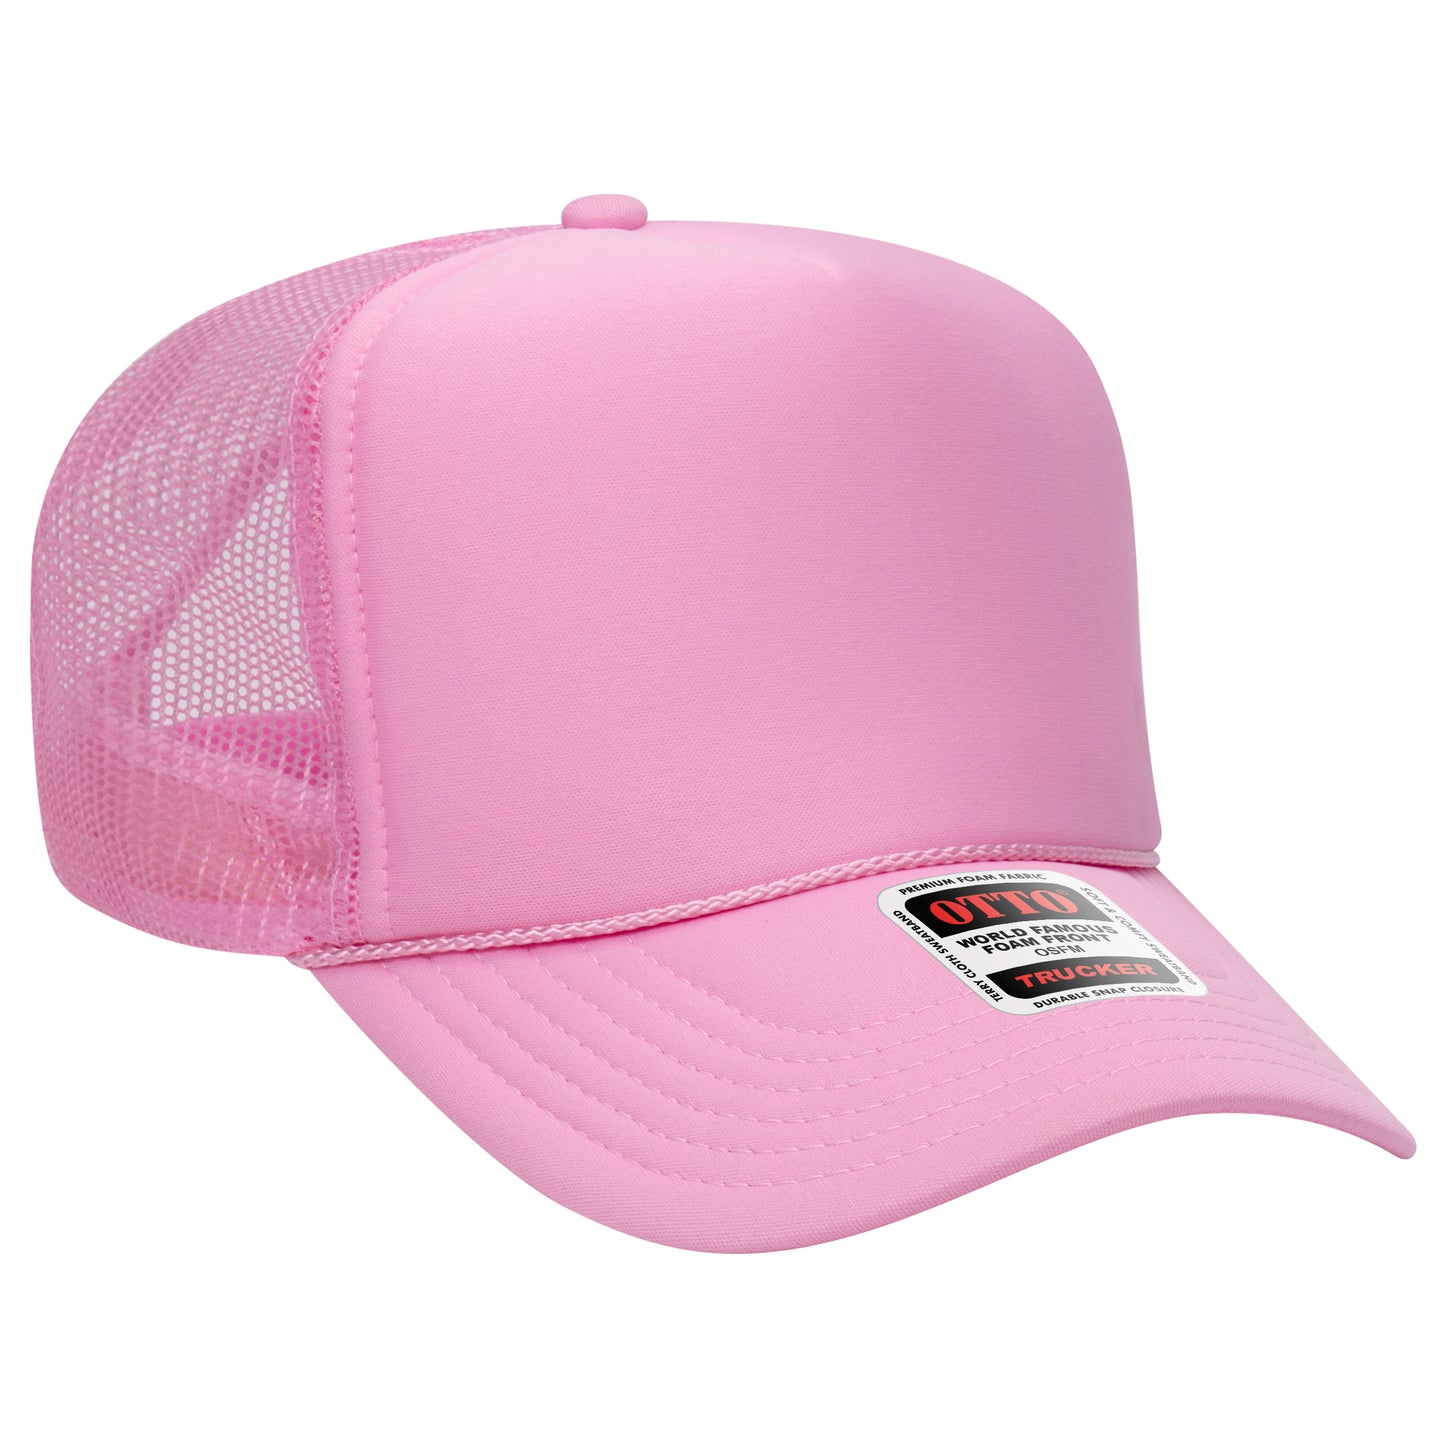 Trucker Hats | Hat Bar